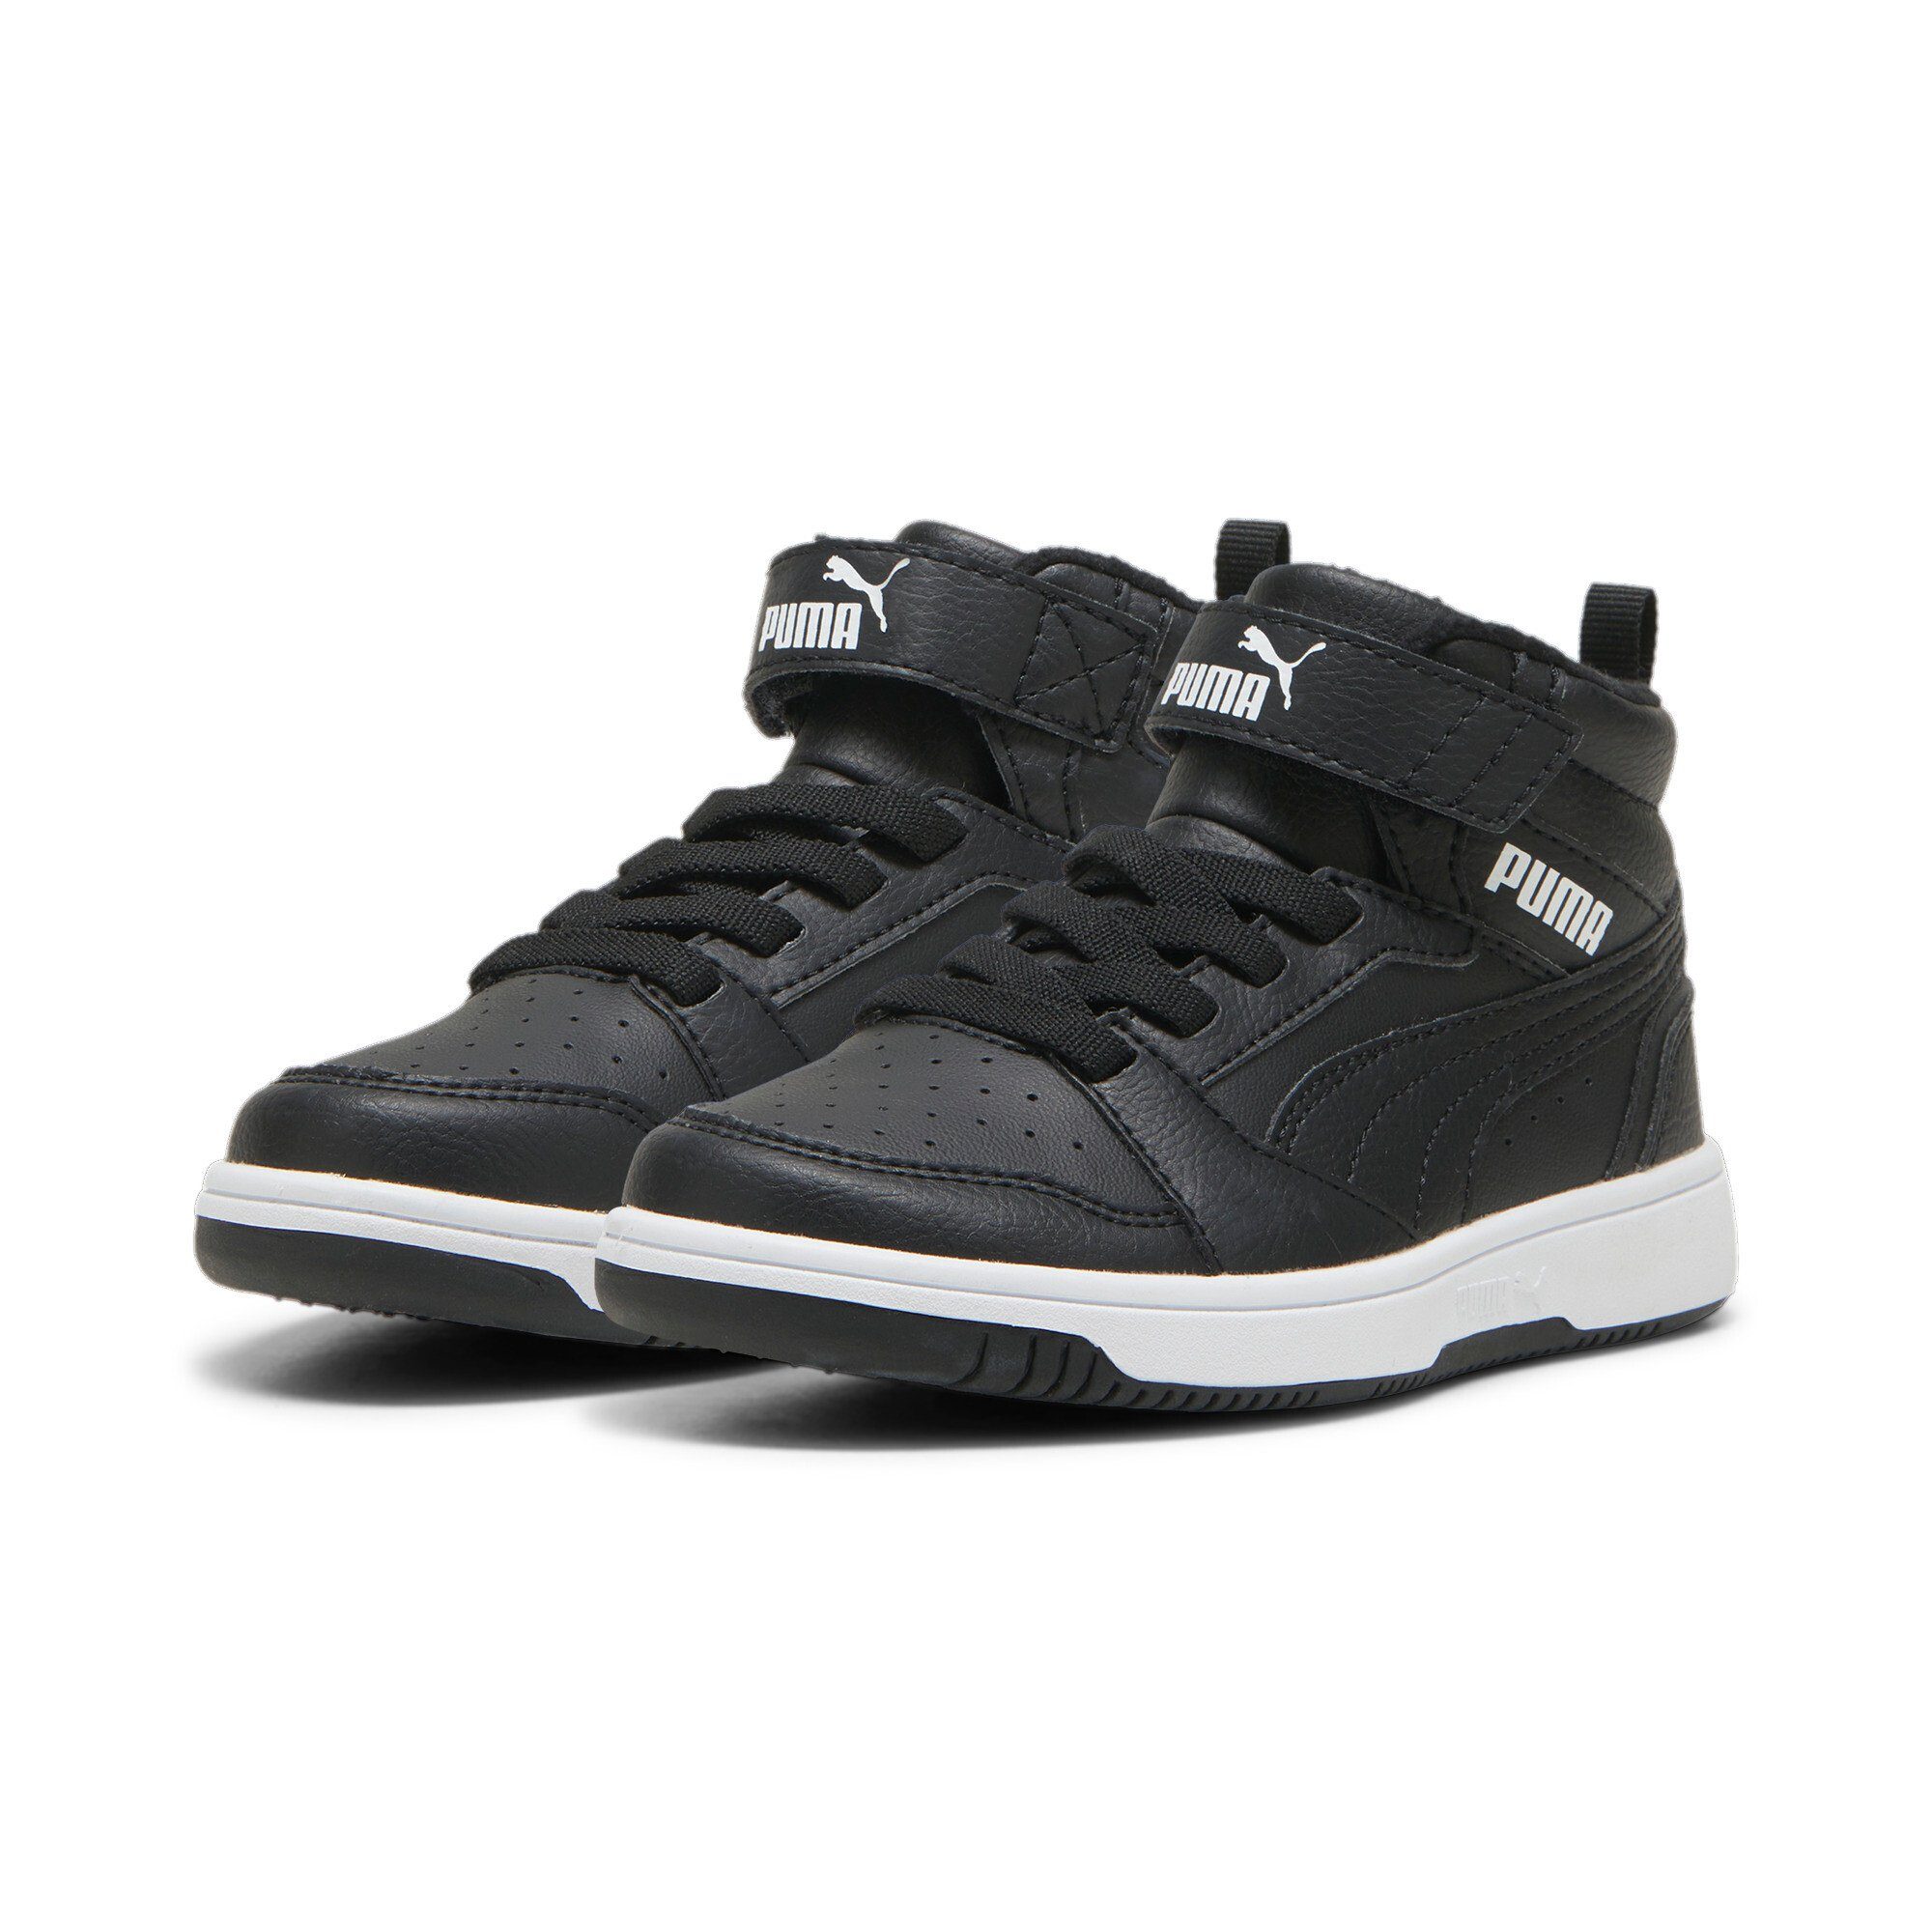 PUMA REBOUND V6 MID WTR AC+ PS Sneaker PUMA Black-PUMA White | Sneaker high